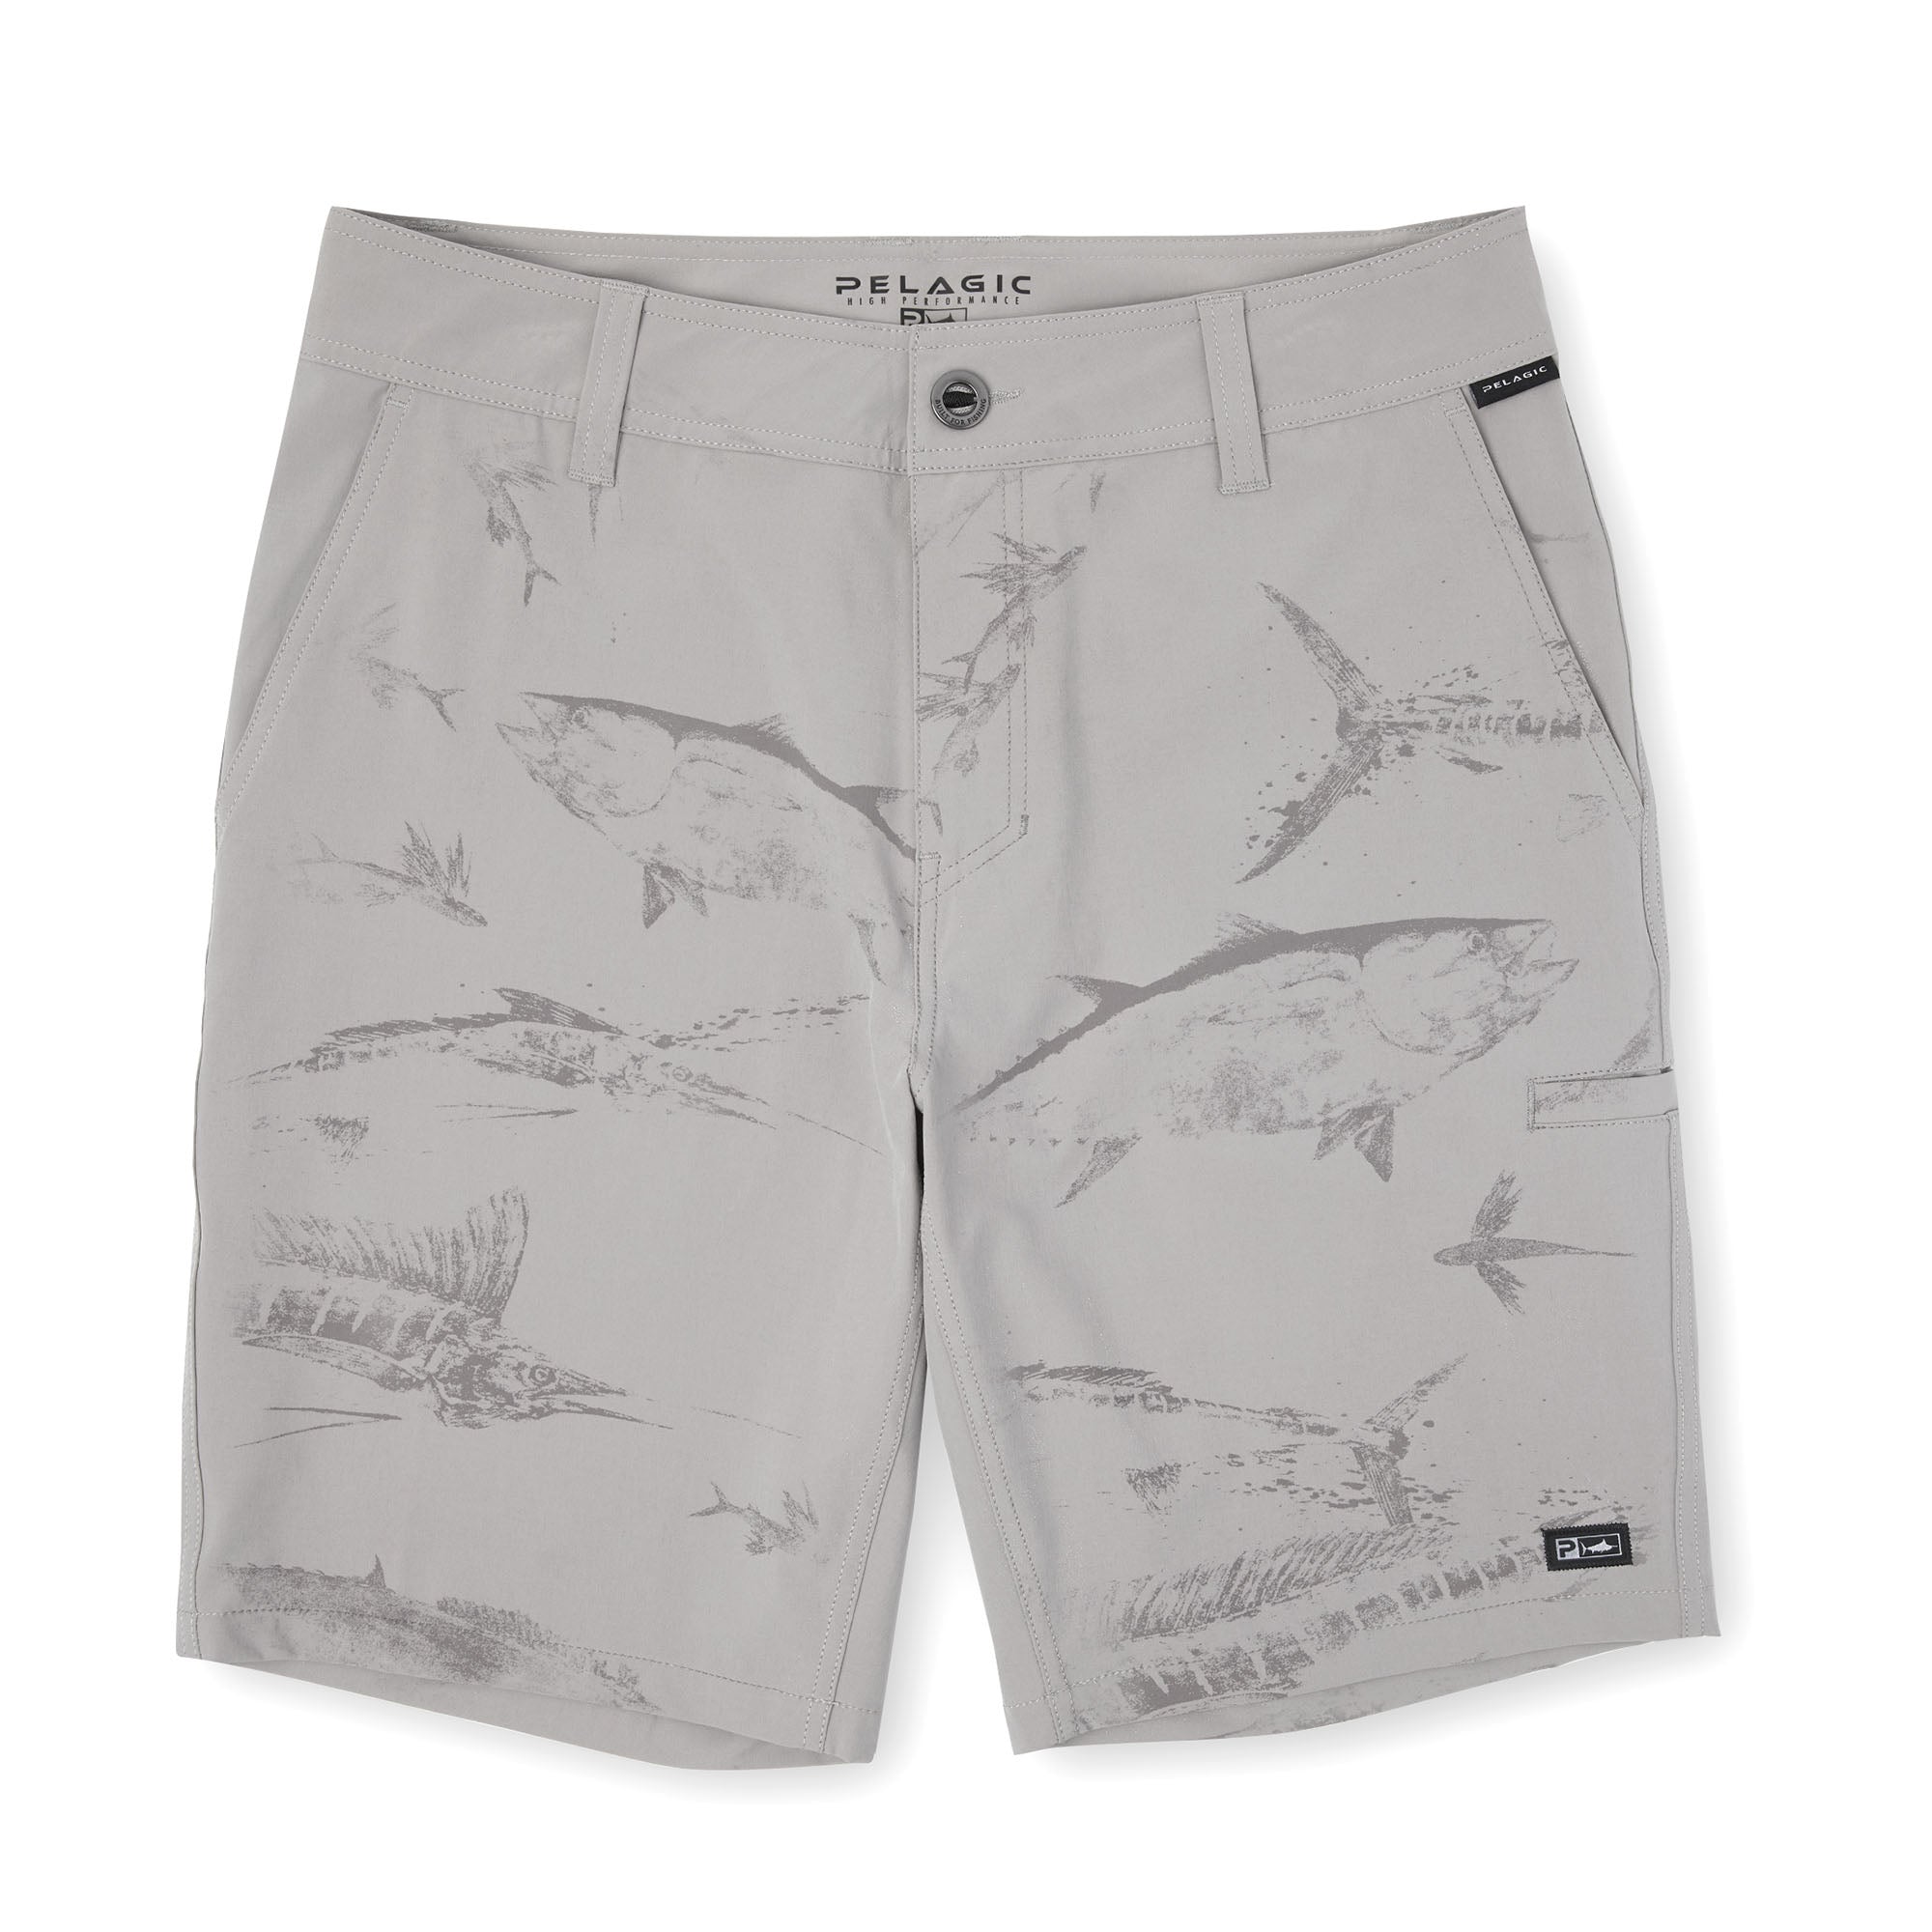 Deep Sea Fishing Shorts, H20 Activated Fabric